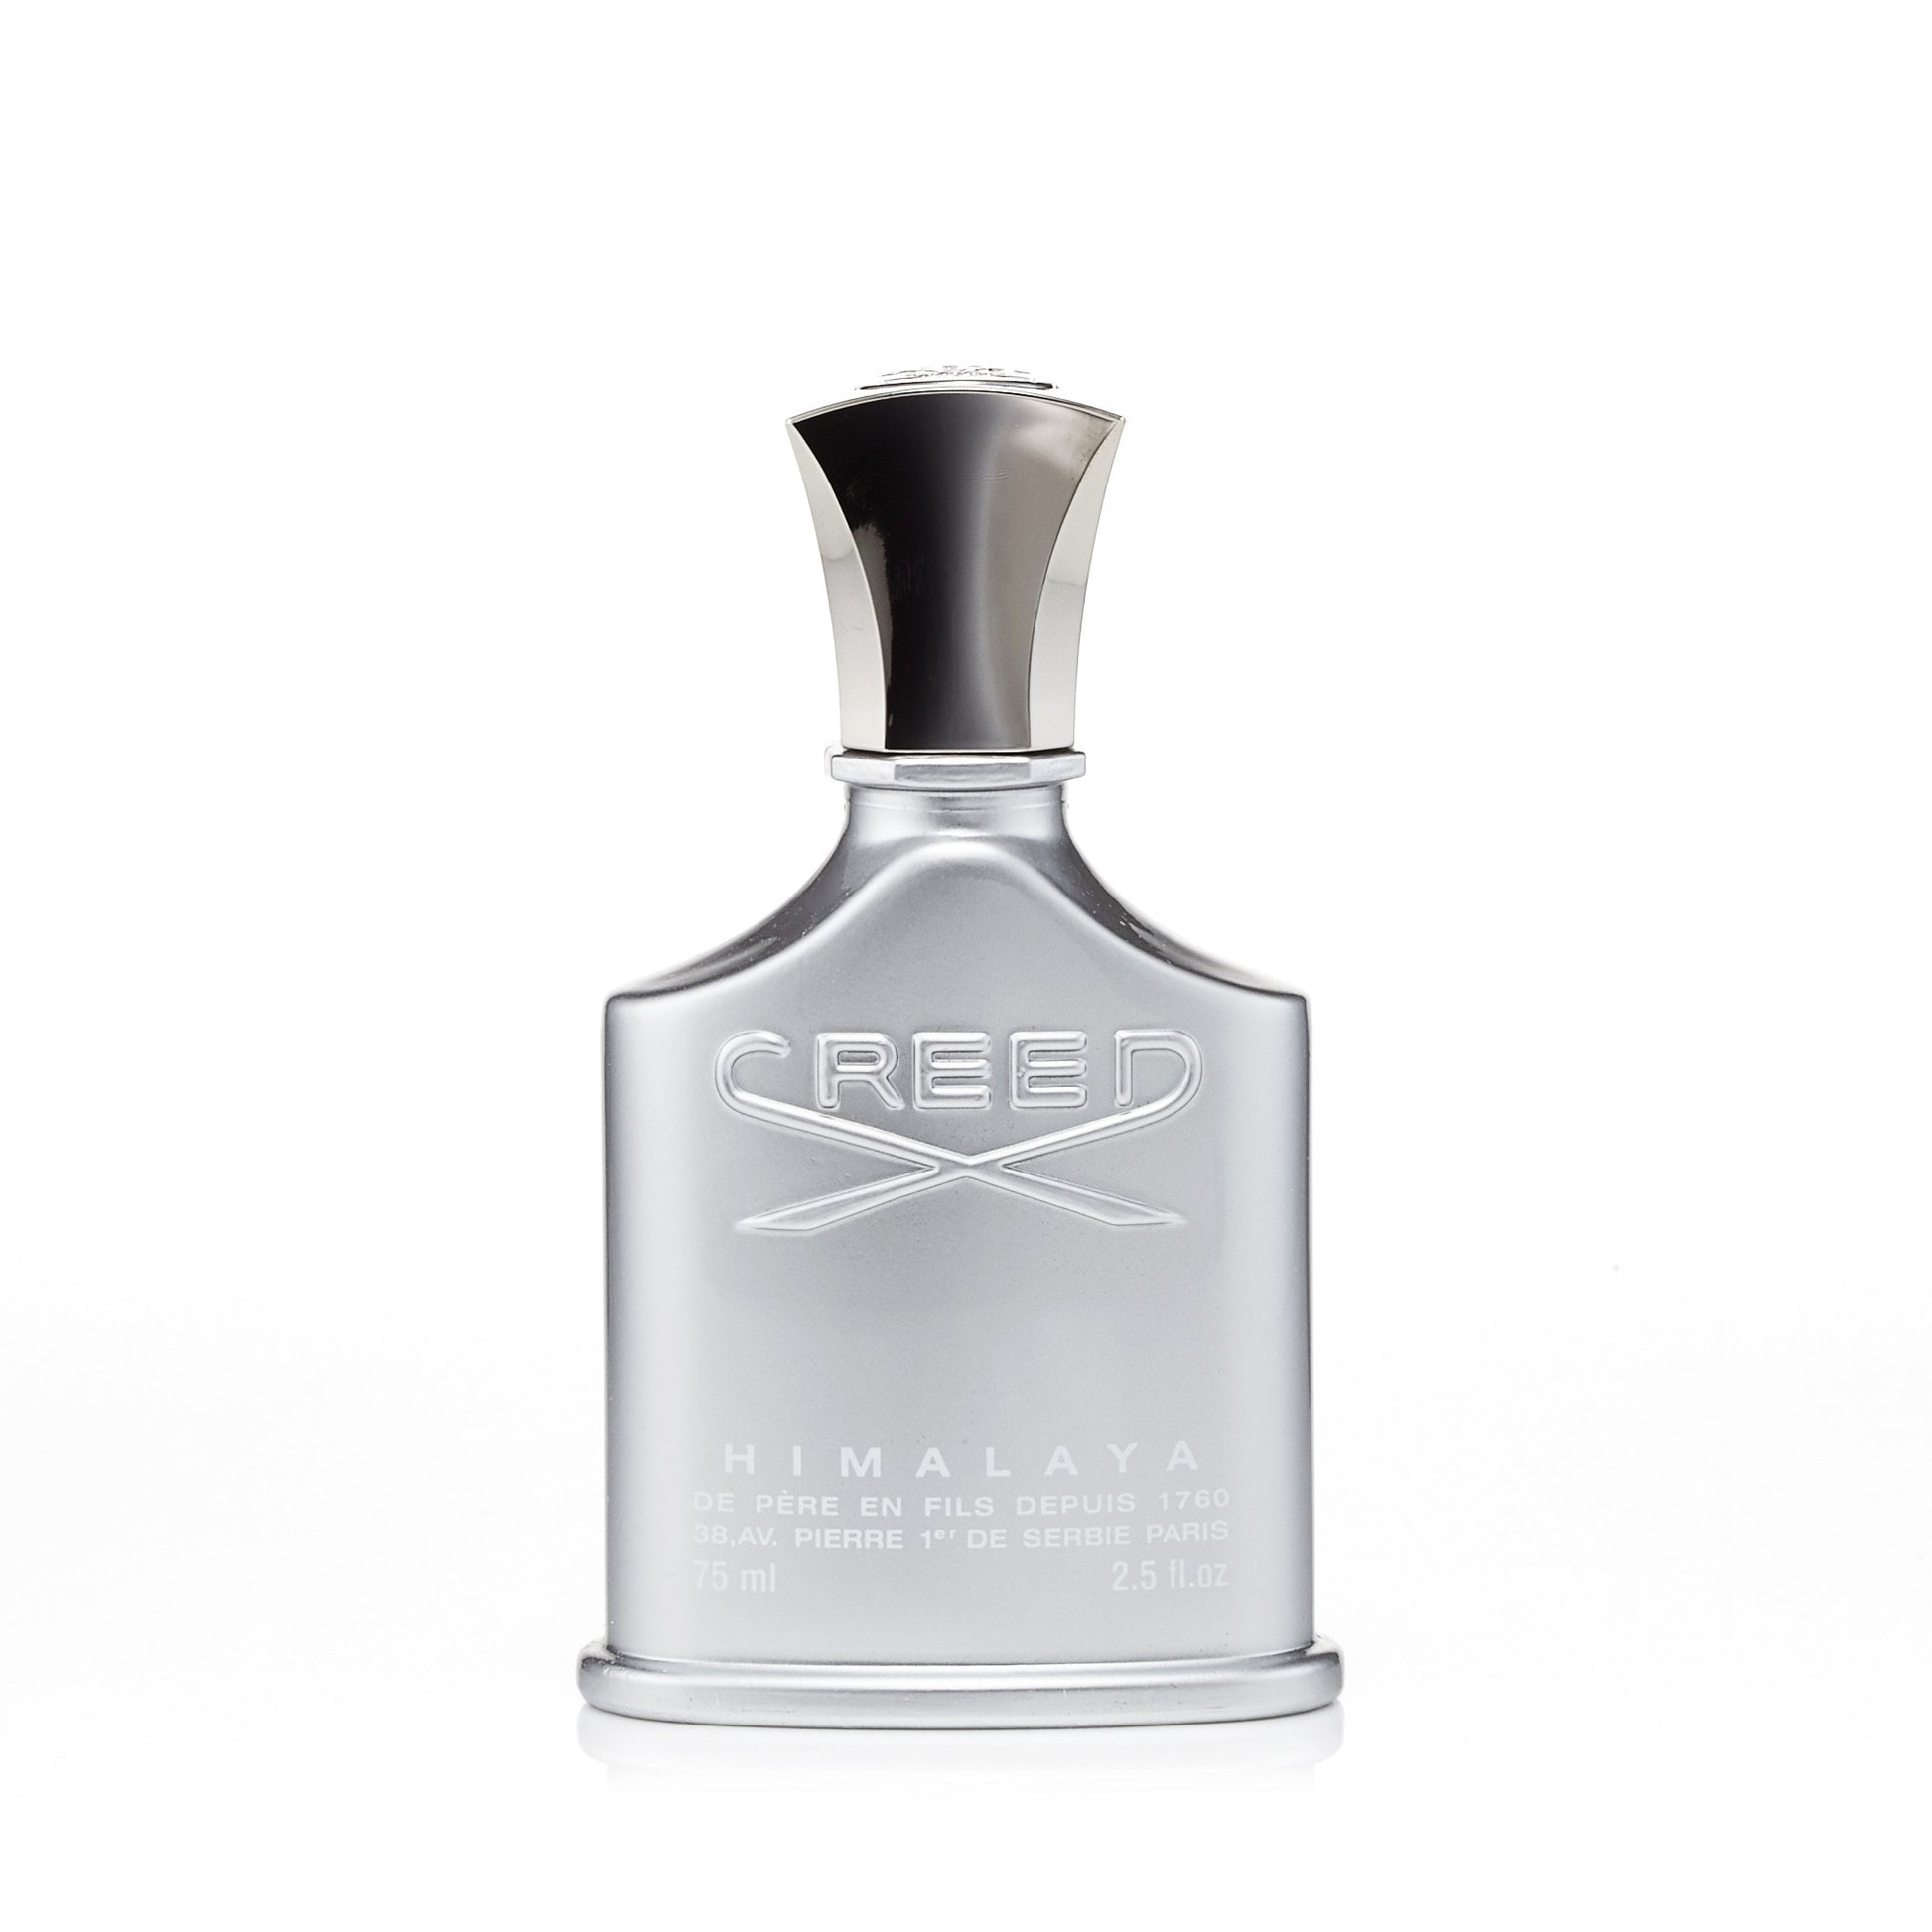 Himalaya Eau de Parfum Spray for Men by Creed, Product image 4